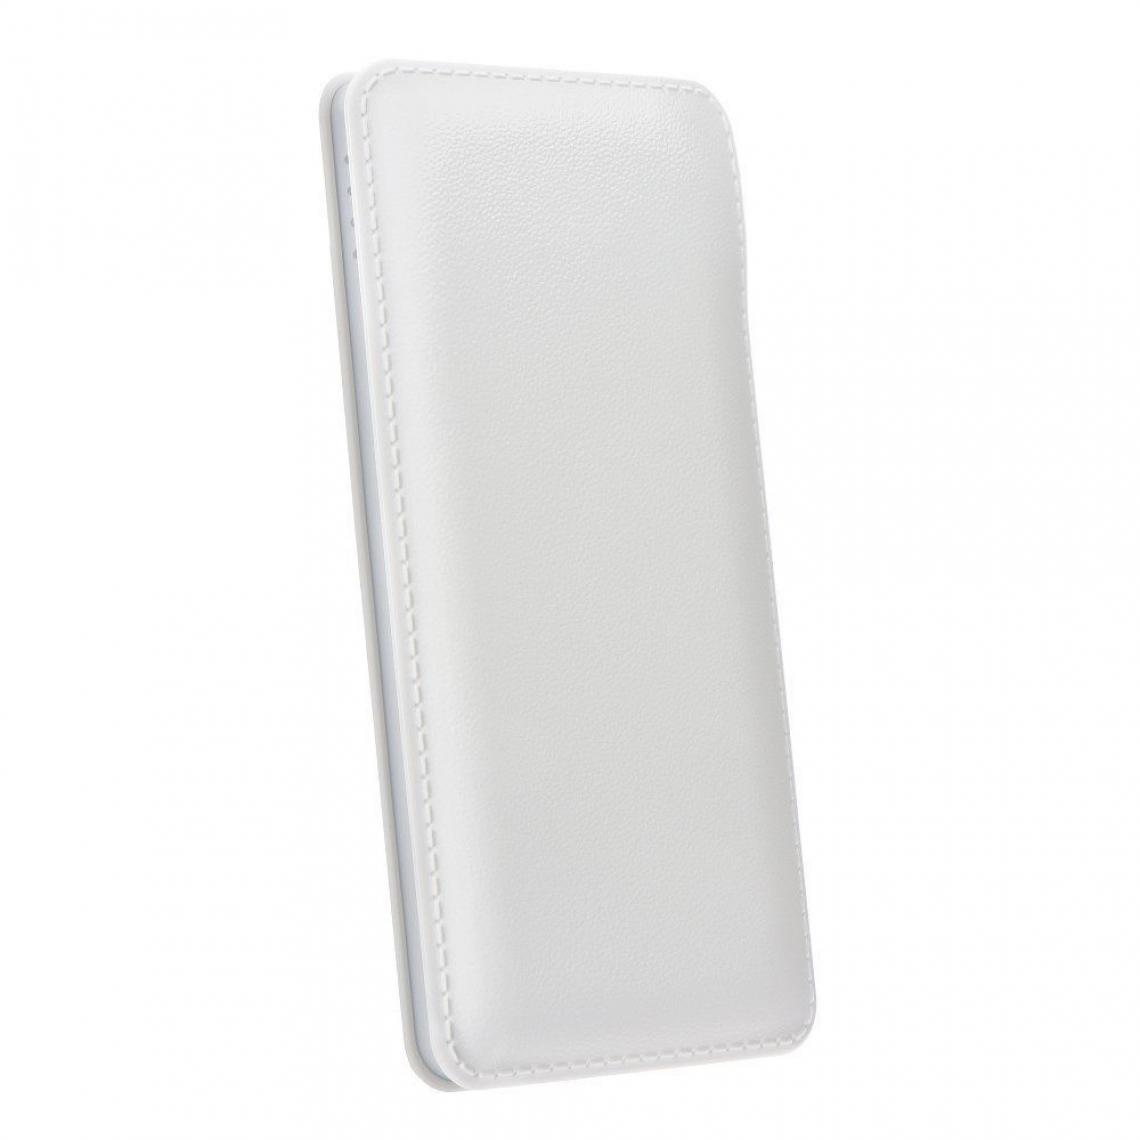 Ozzzo - Chargeur batterie externe 30000 mAh powerbank ozzzo blanc pour SAMSUNG s7710 Galaxy Xcover 2 - Autres accessoires smartphone